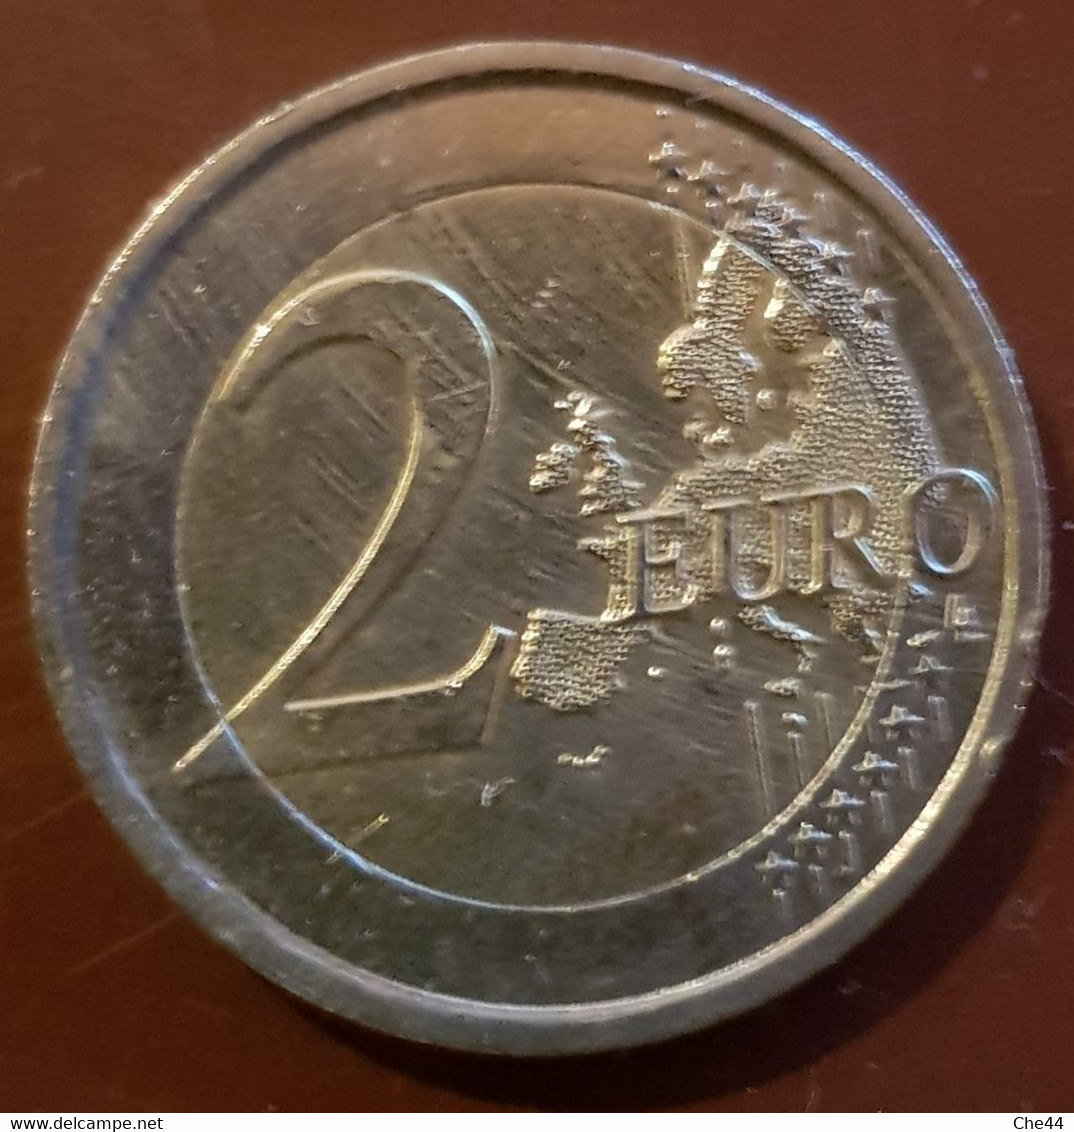 Variété : Slovaquie : 2 Euros 2009. - Errors And Oddities